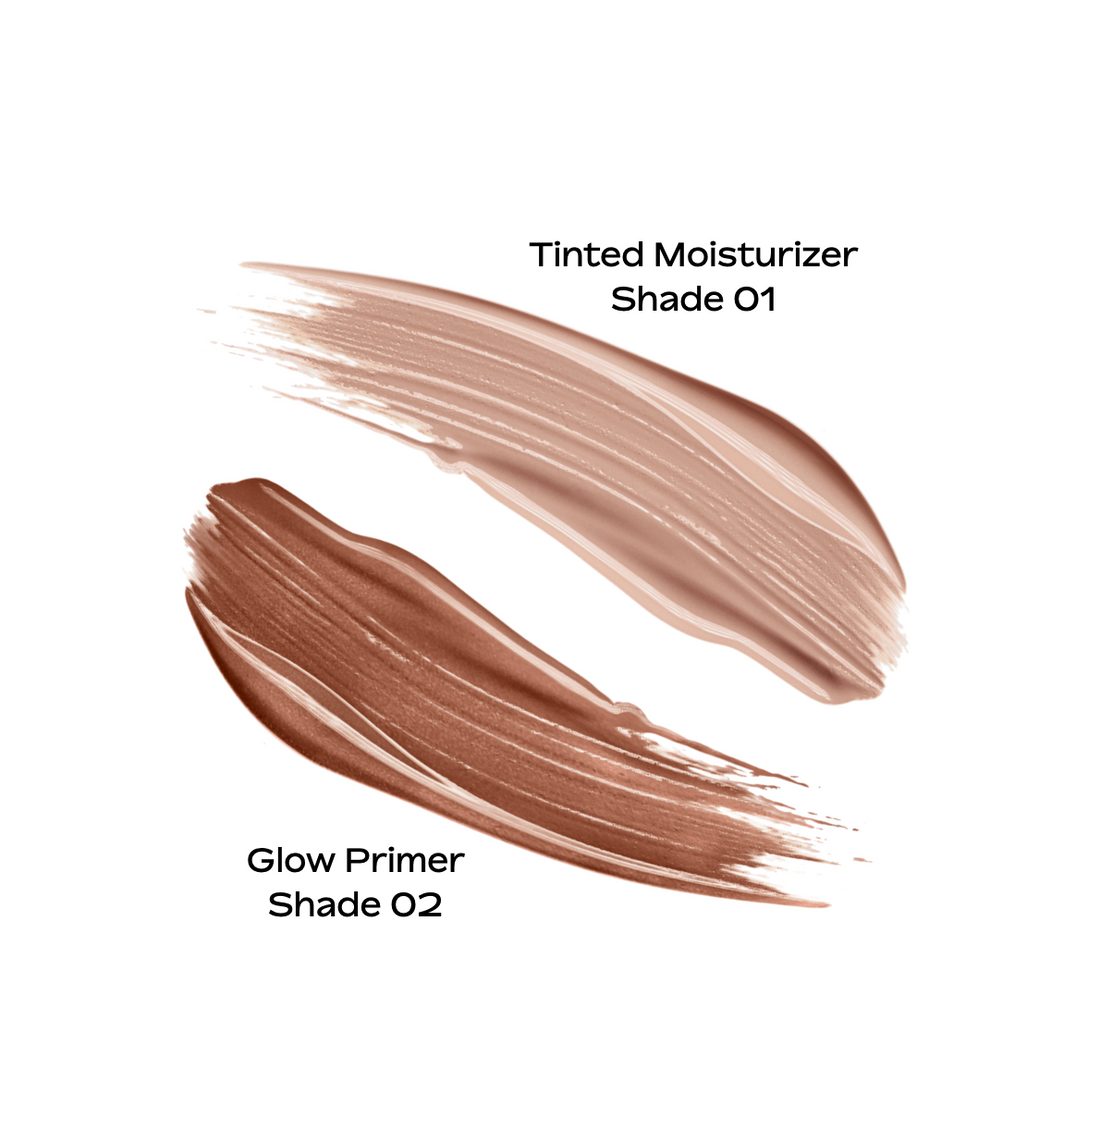 Duo - Glow Primer 02 & Tinted Moisturizer 01